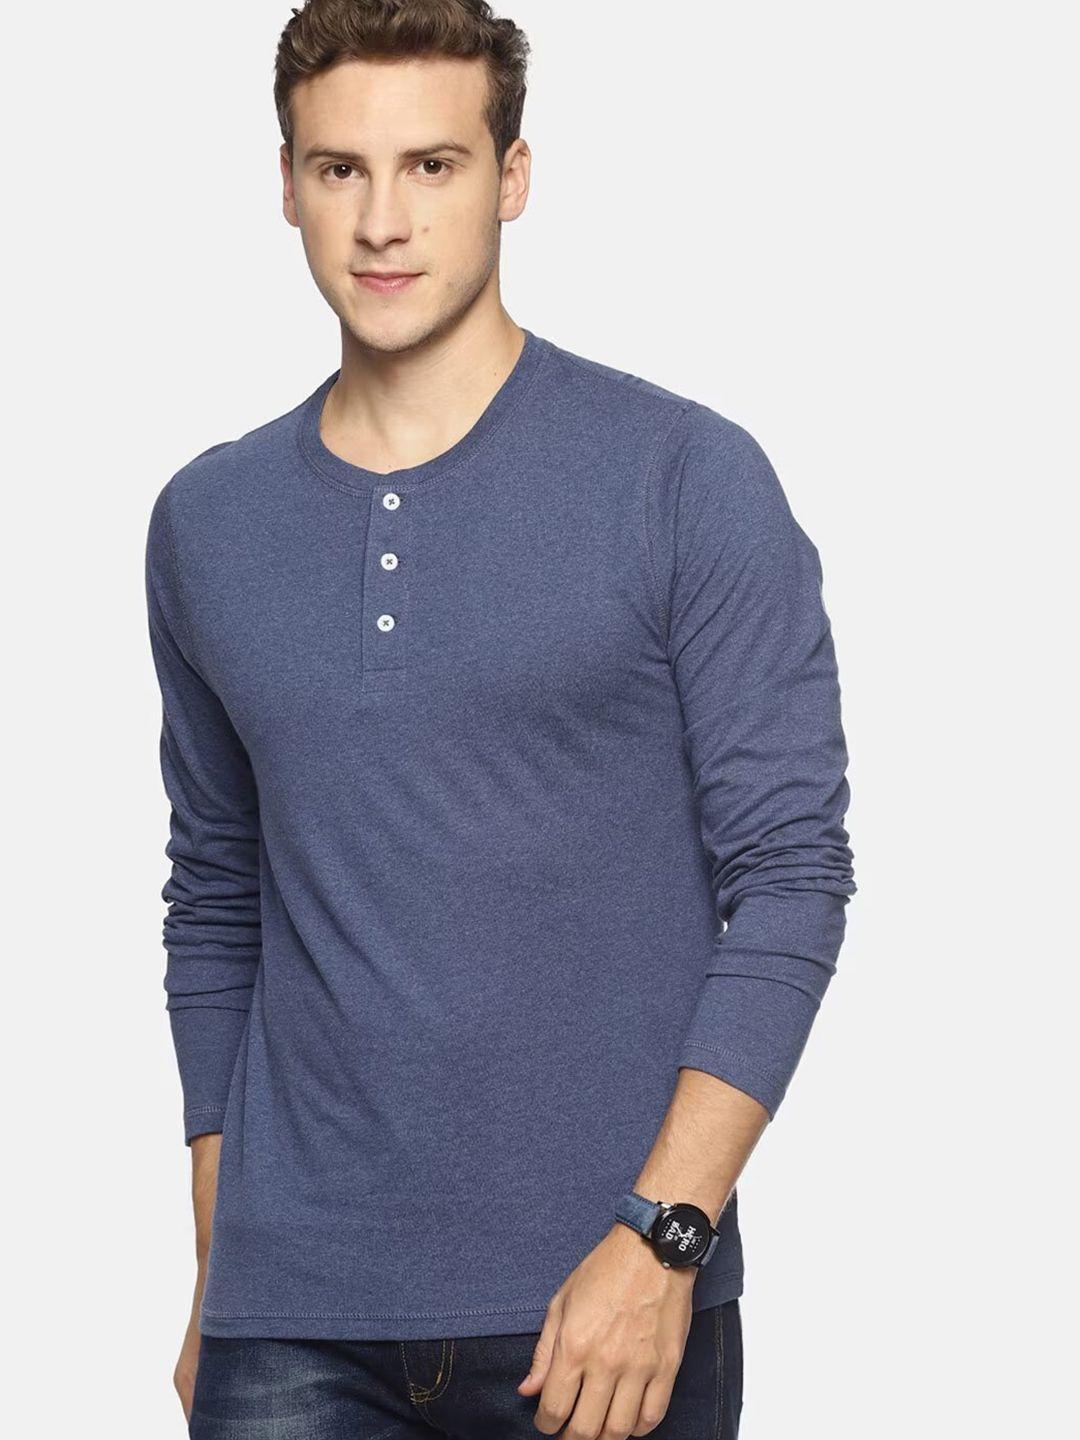 steenbok-henley-neck-slim-fit-pure-cotton-casual-t-shirt